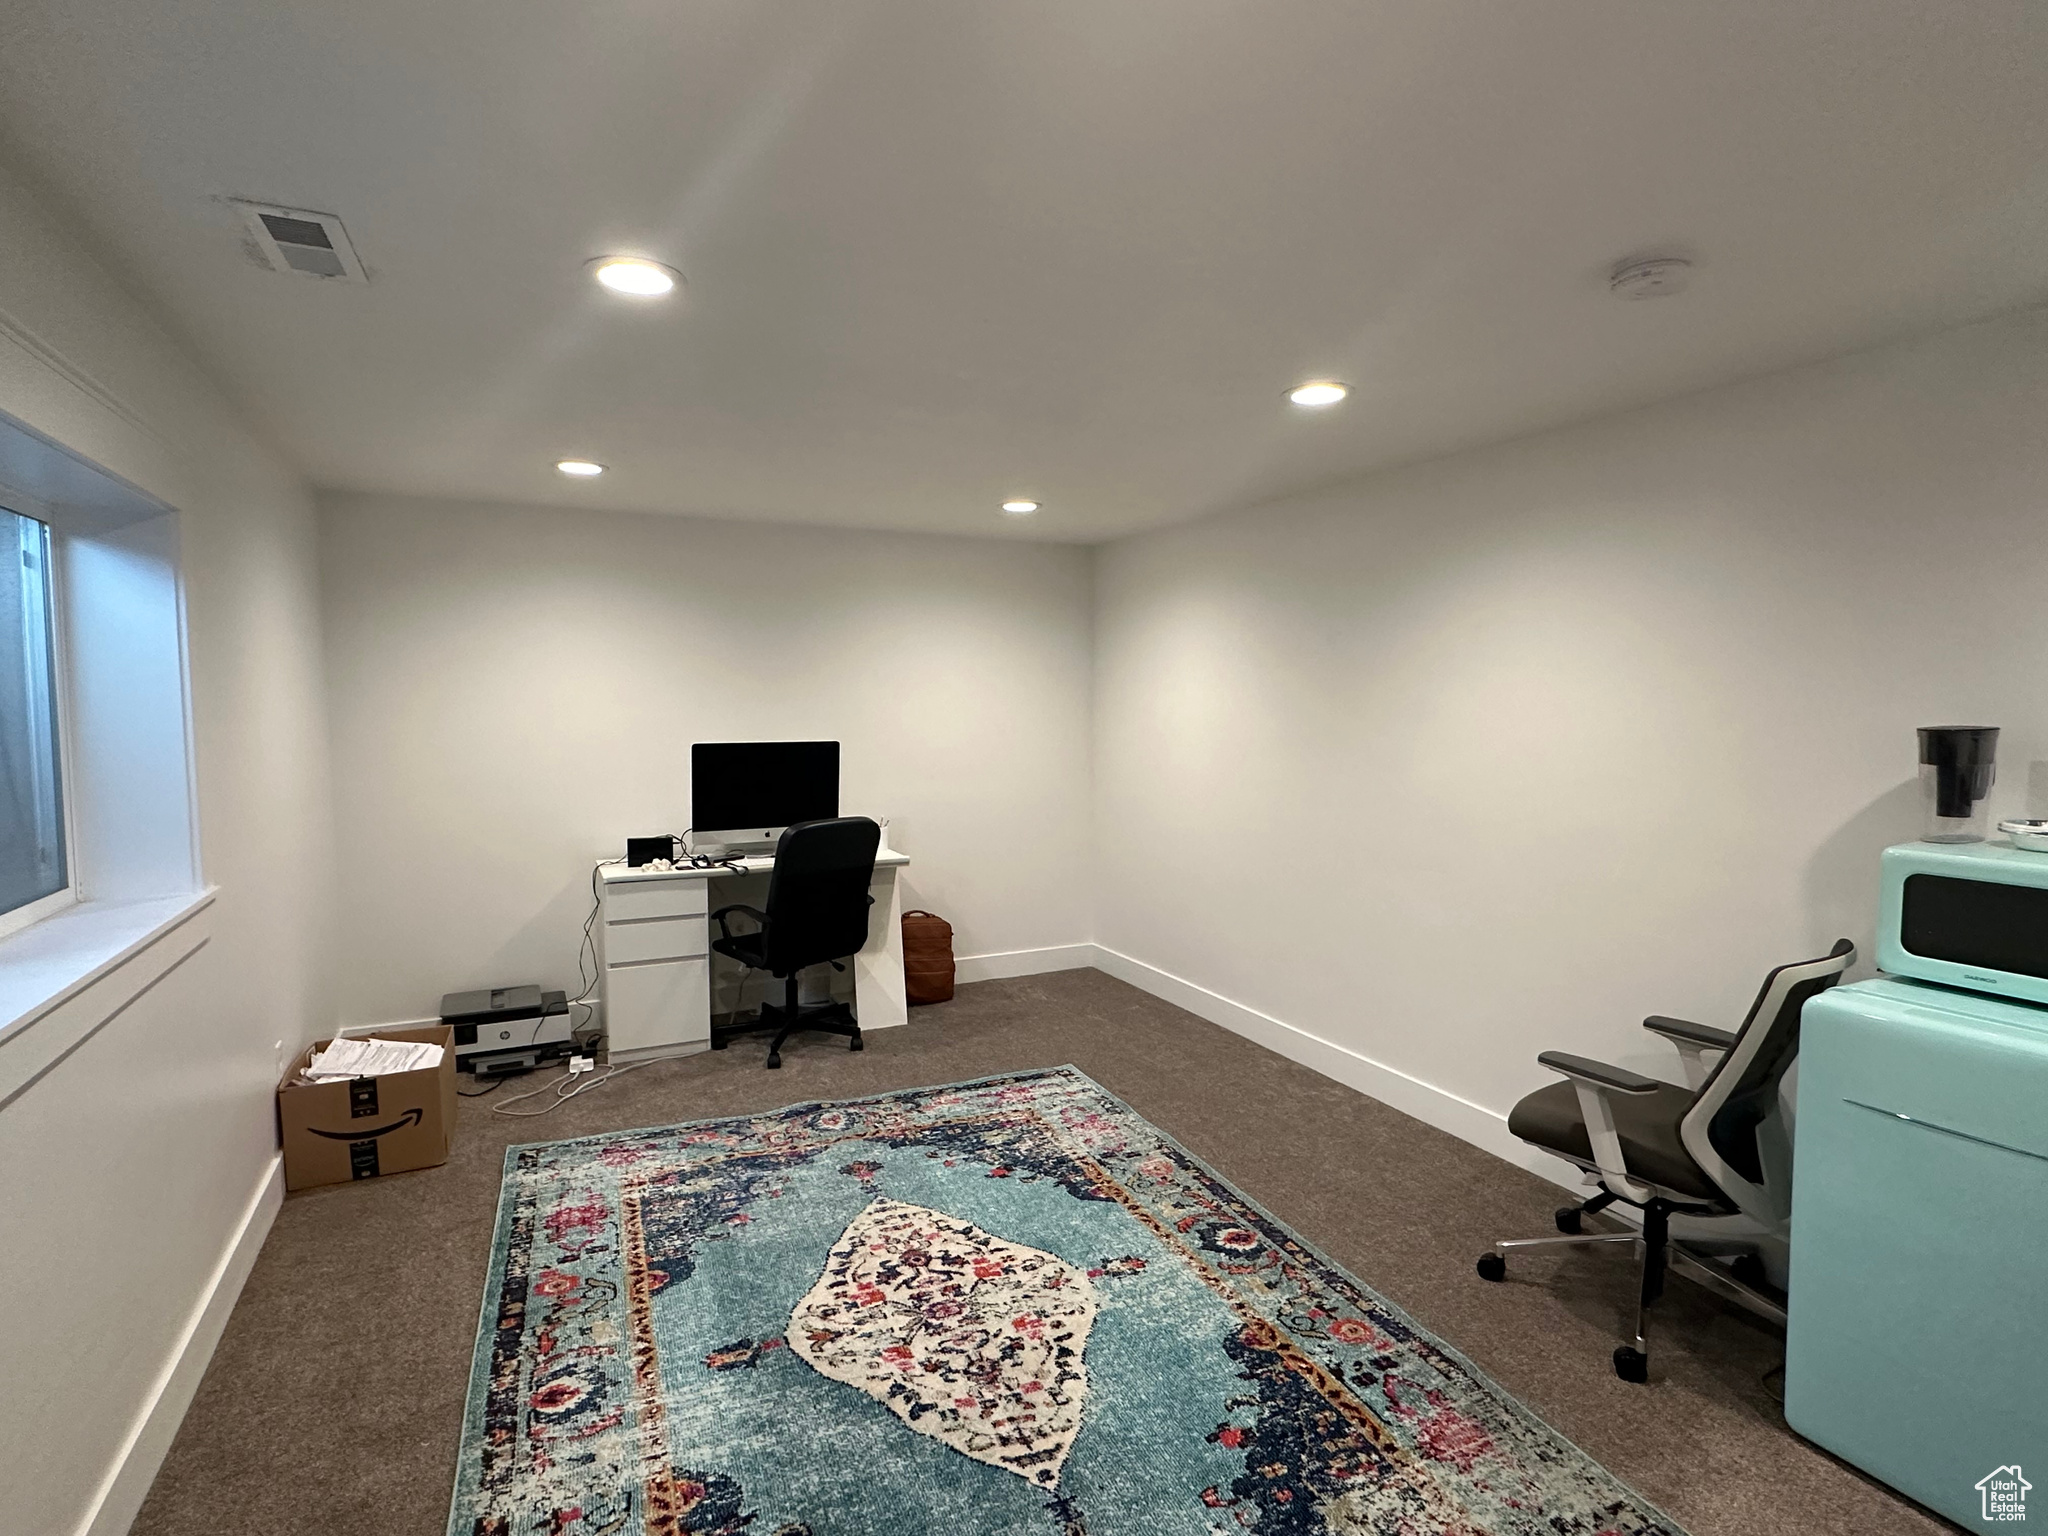 Office with dark carpet